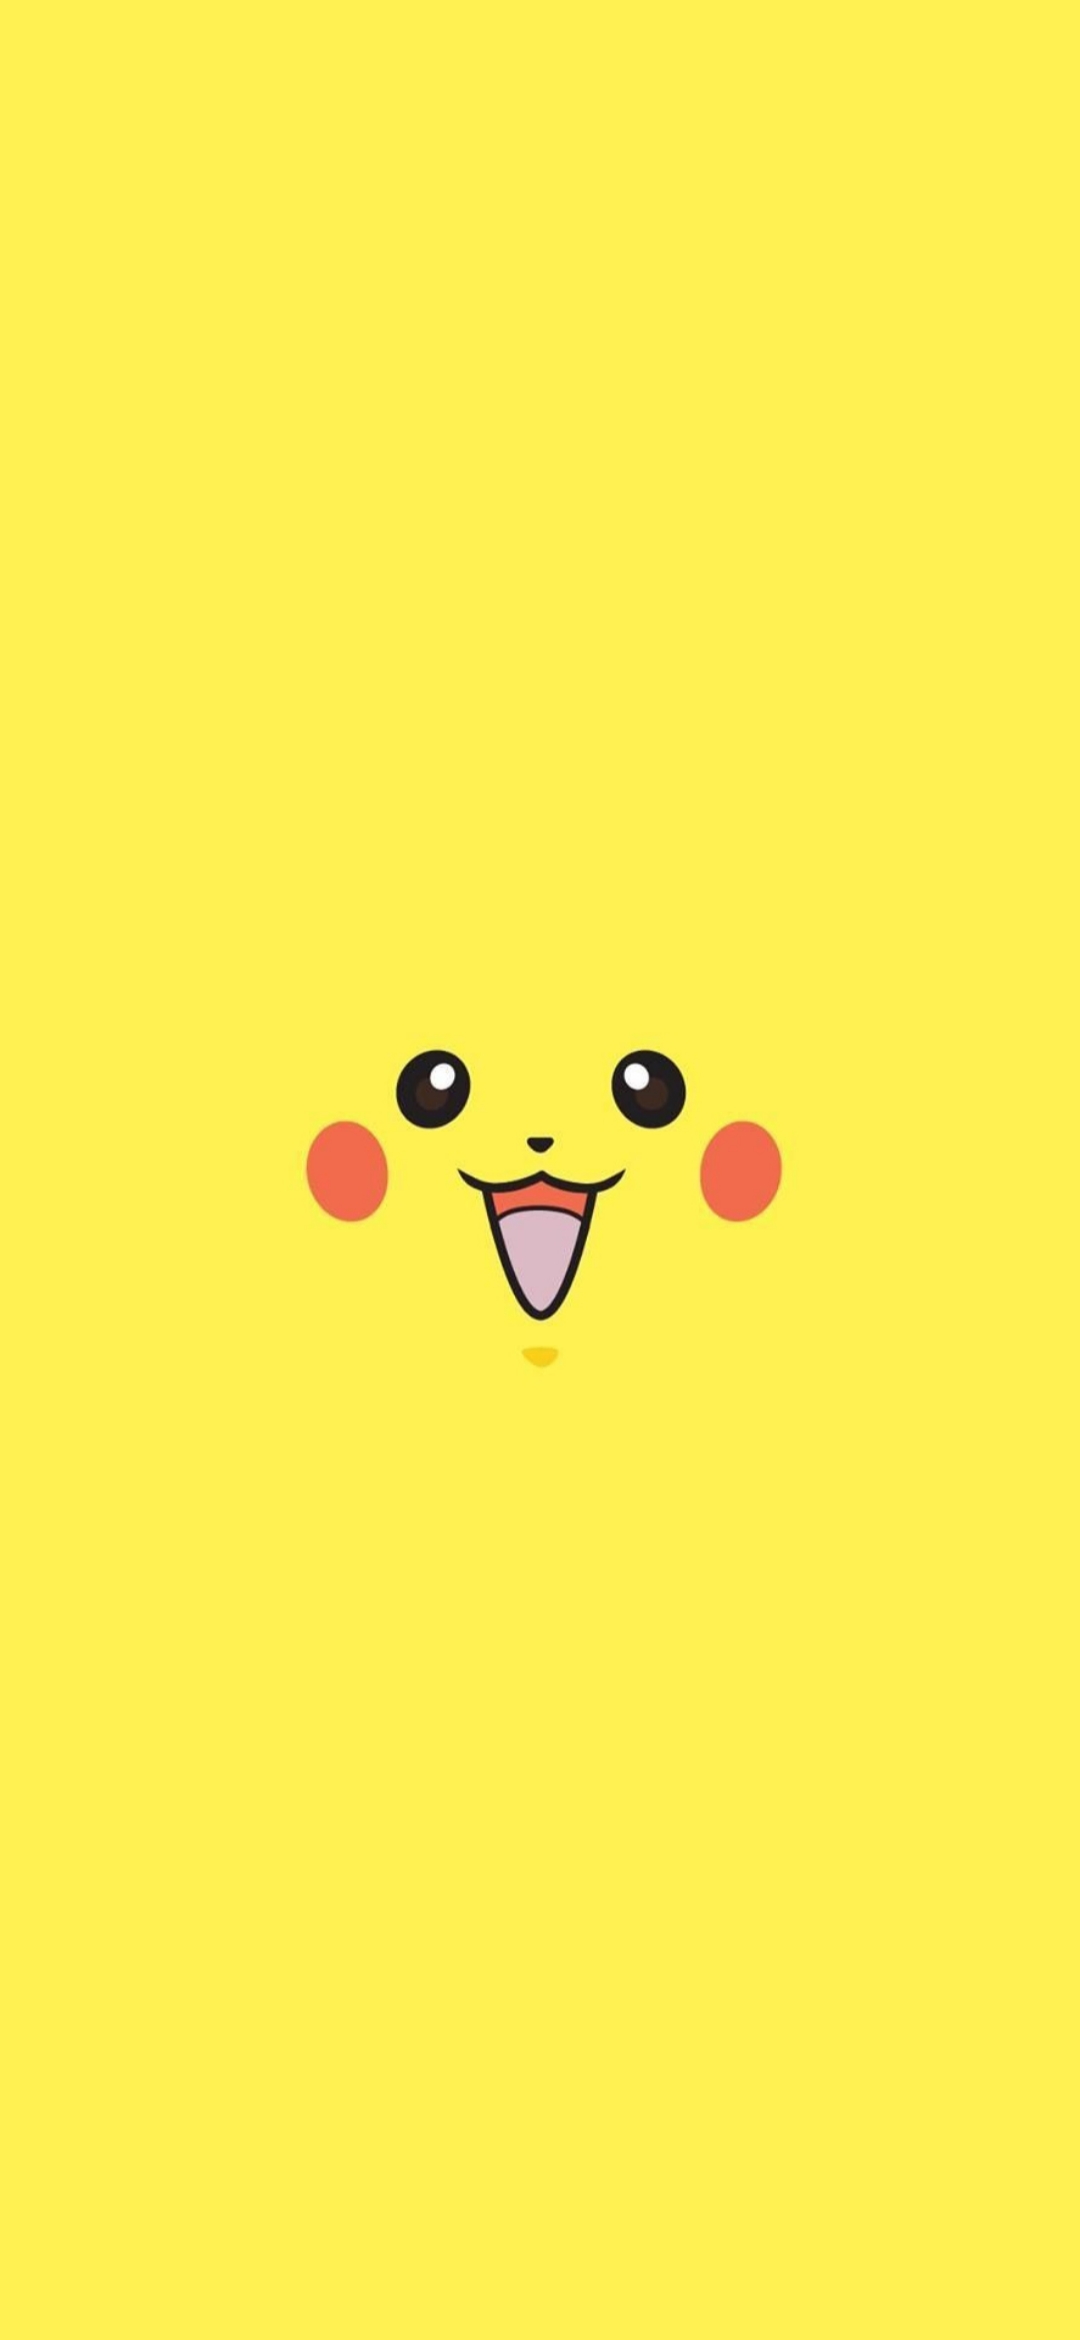 Pikachu Wallpapers - Top 35 Best Pikachu Backgrounds Download